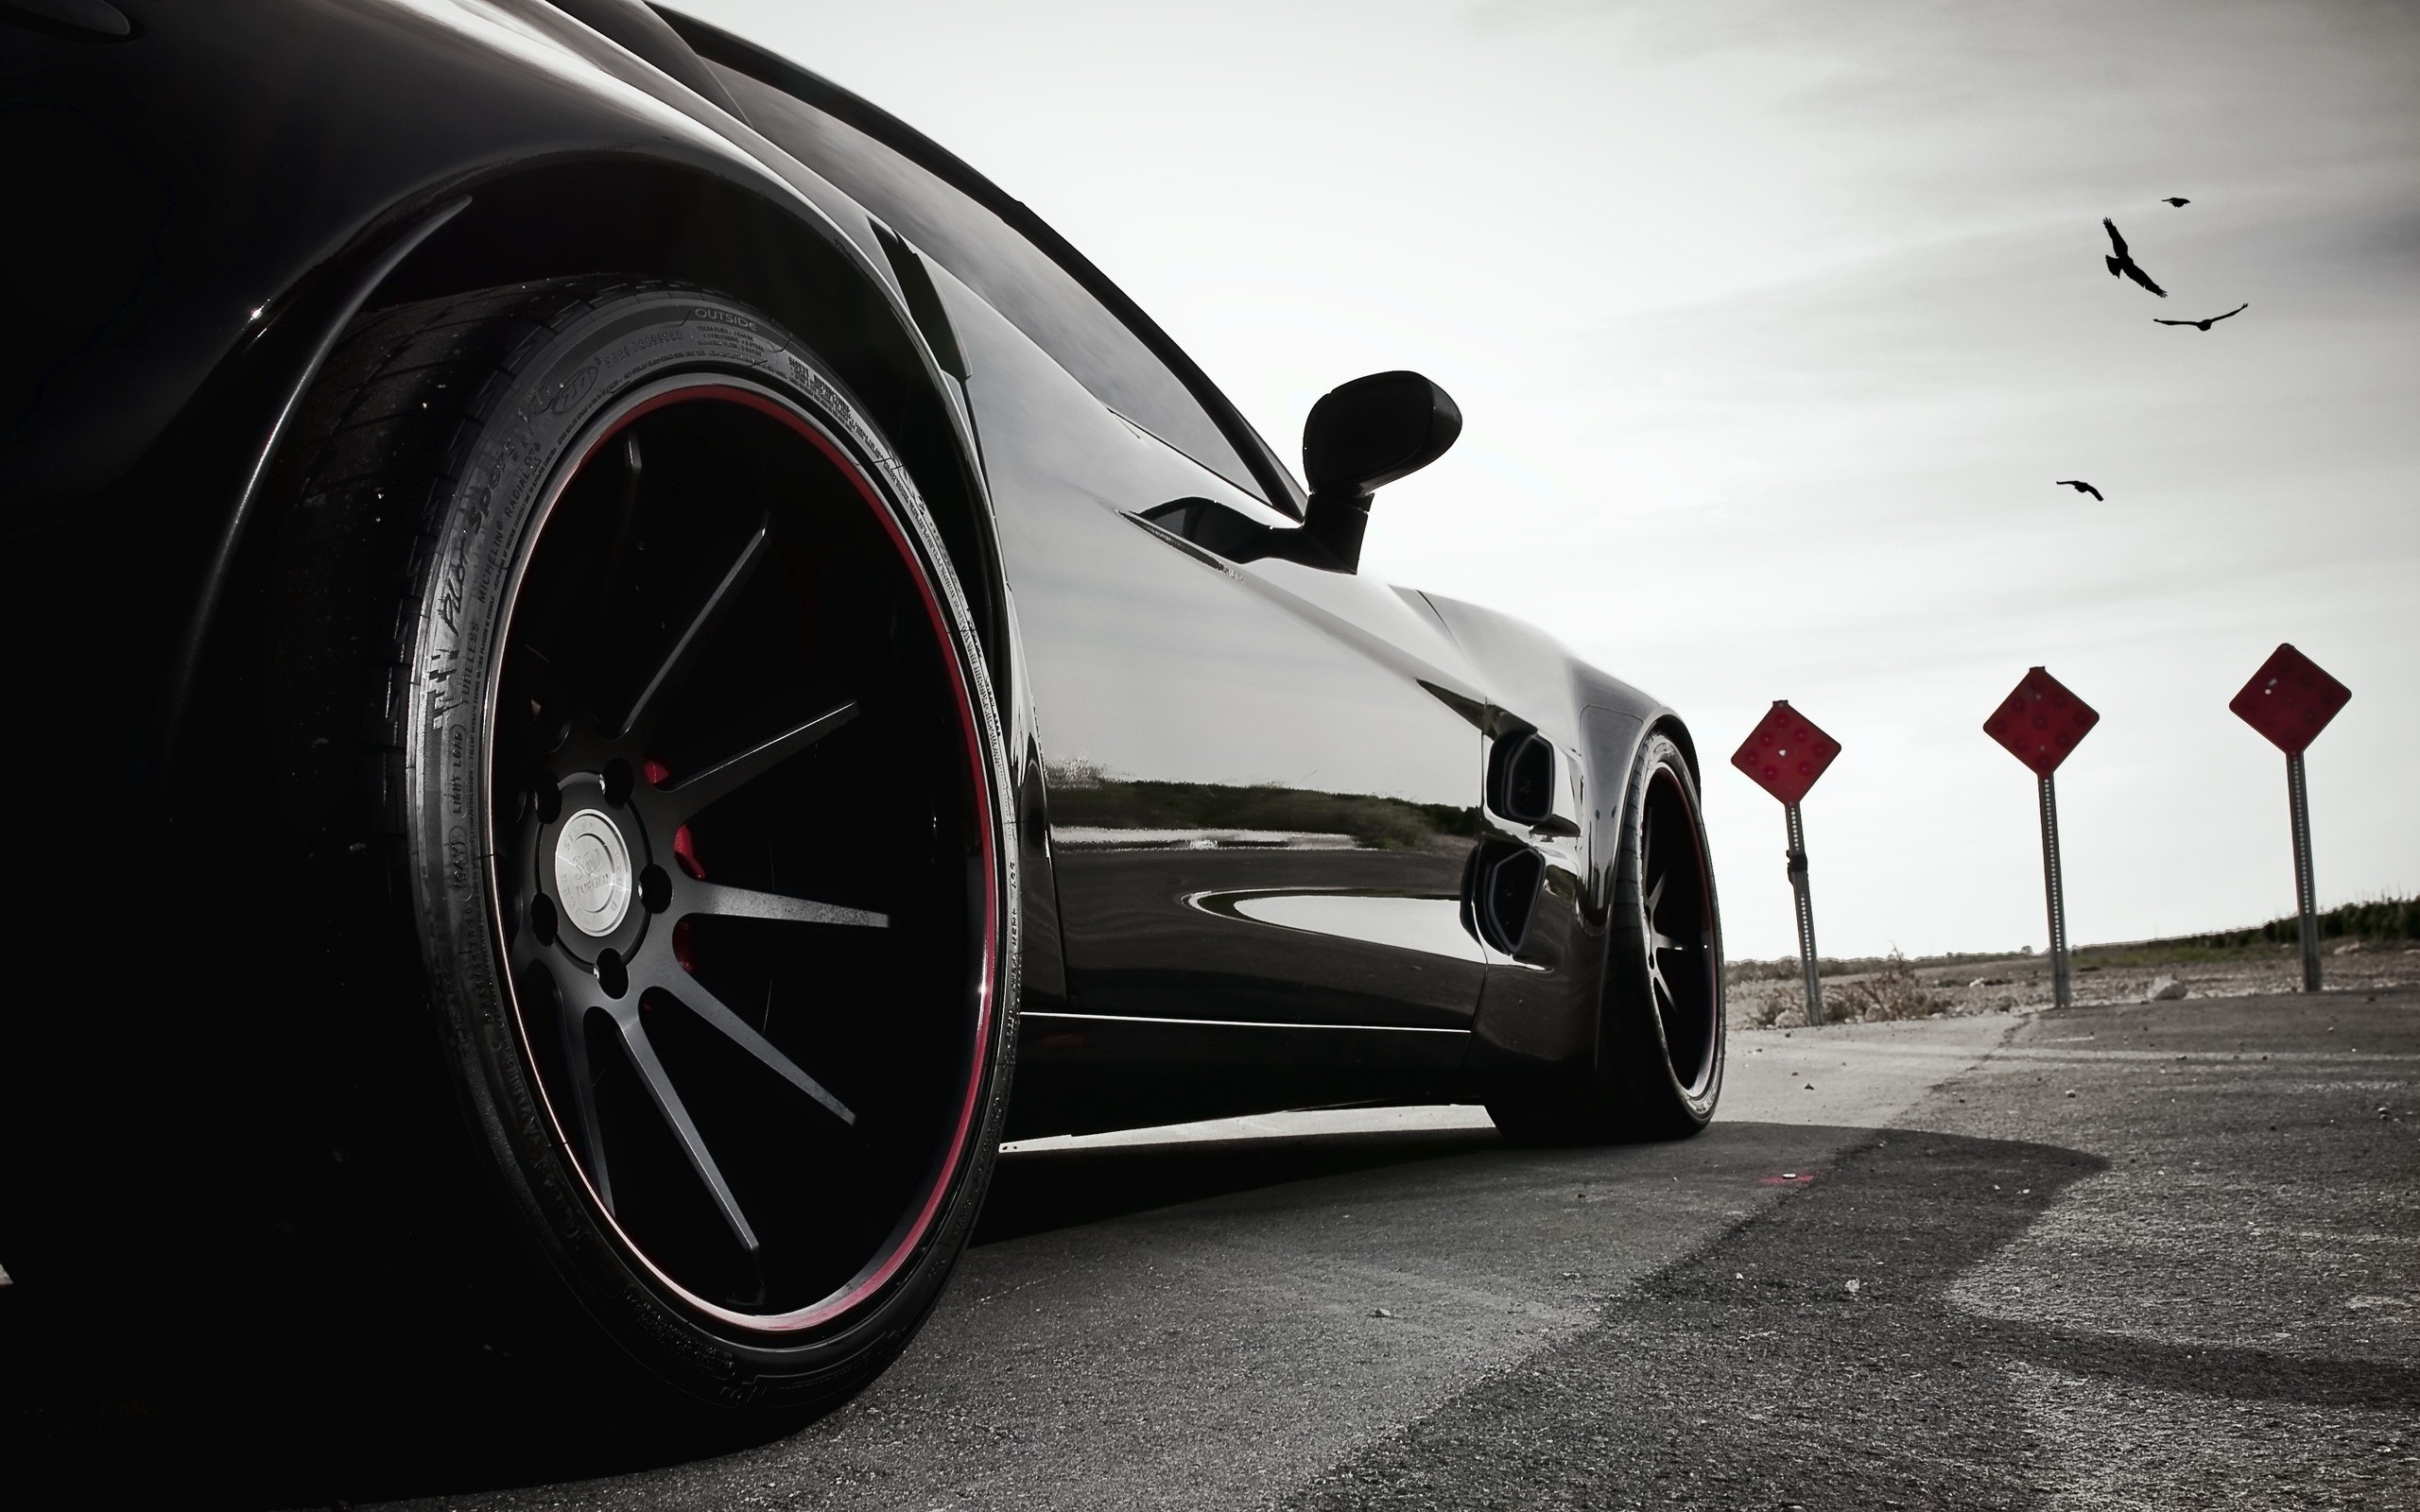 2560x1600 ... chevrolet corvette c6 car wallpaper hd black ...